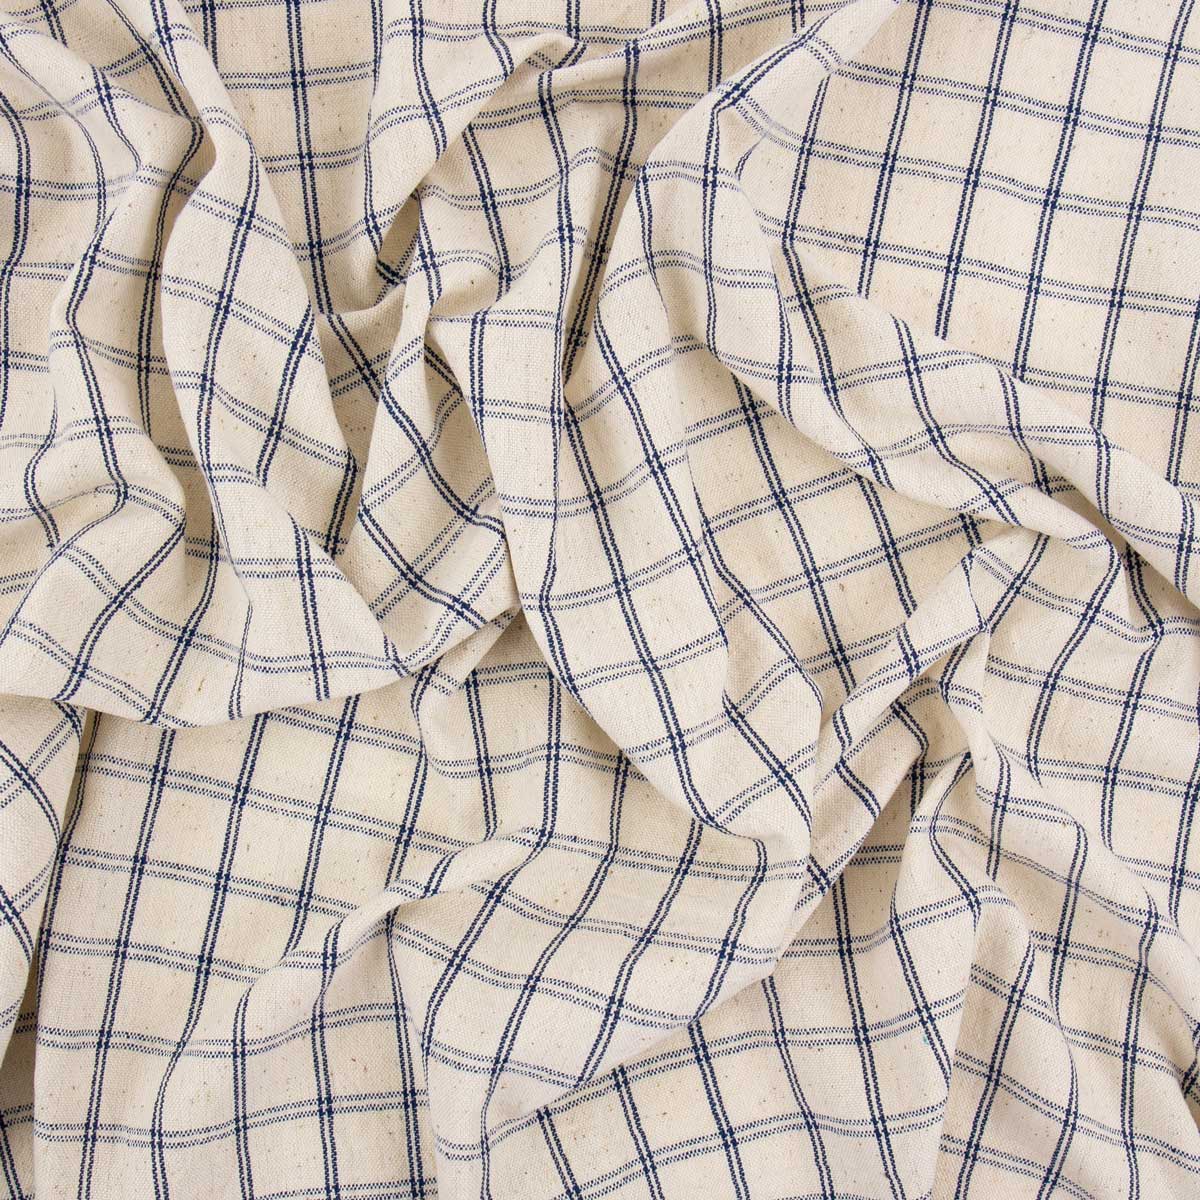 ECO DOUBLEGRID Fabric, offwhite/blue